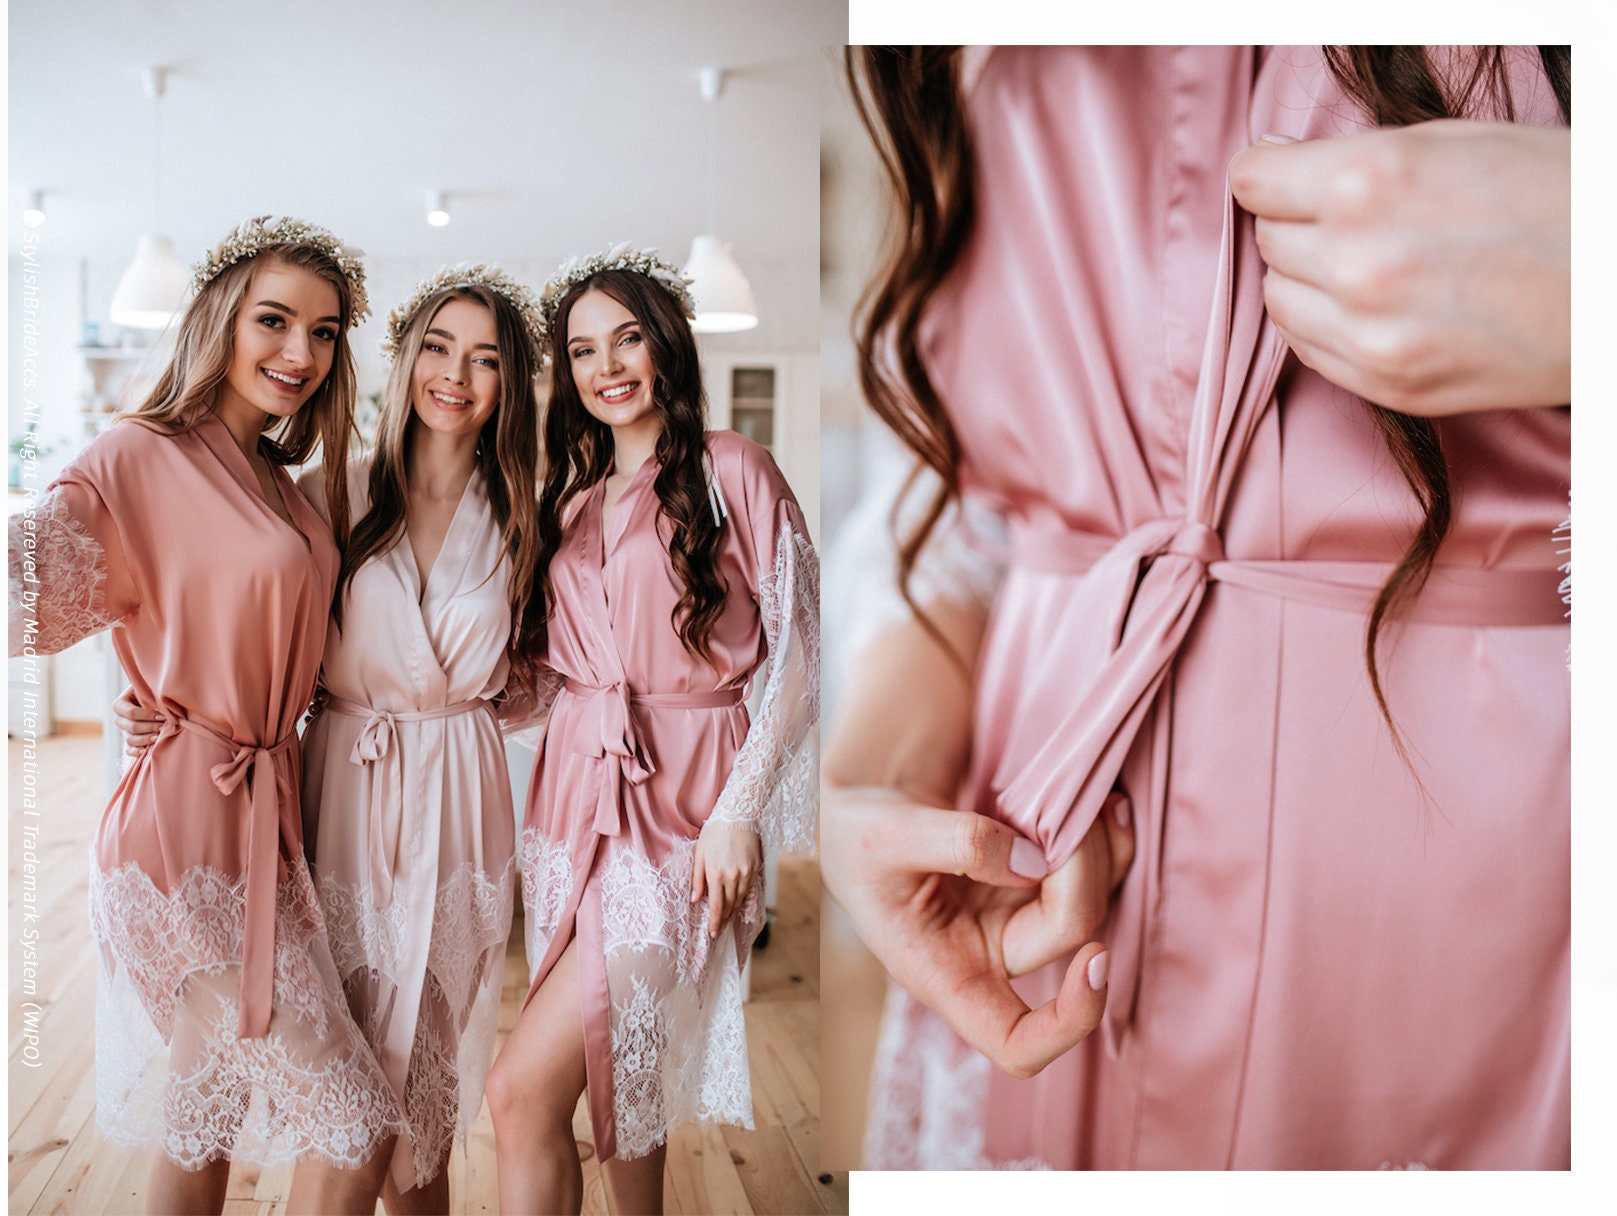 Blush Palette Bridesmaid Robes Luxury Handmade Silk image pic pic